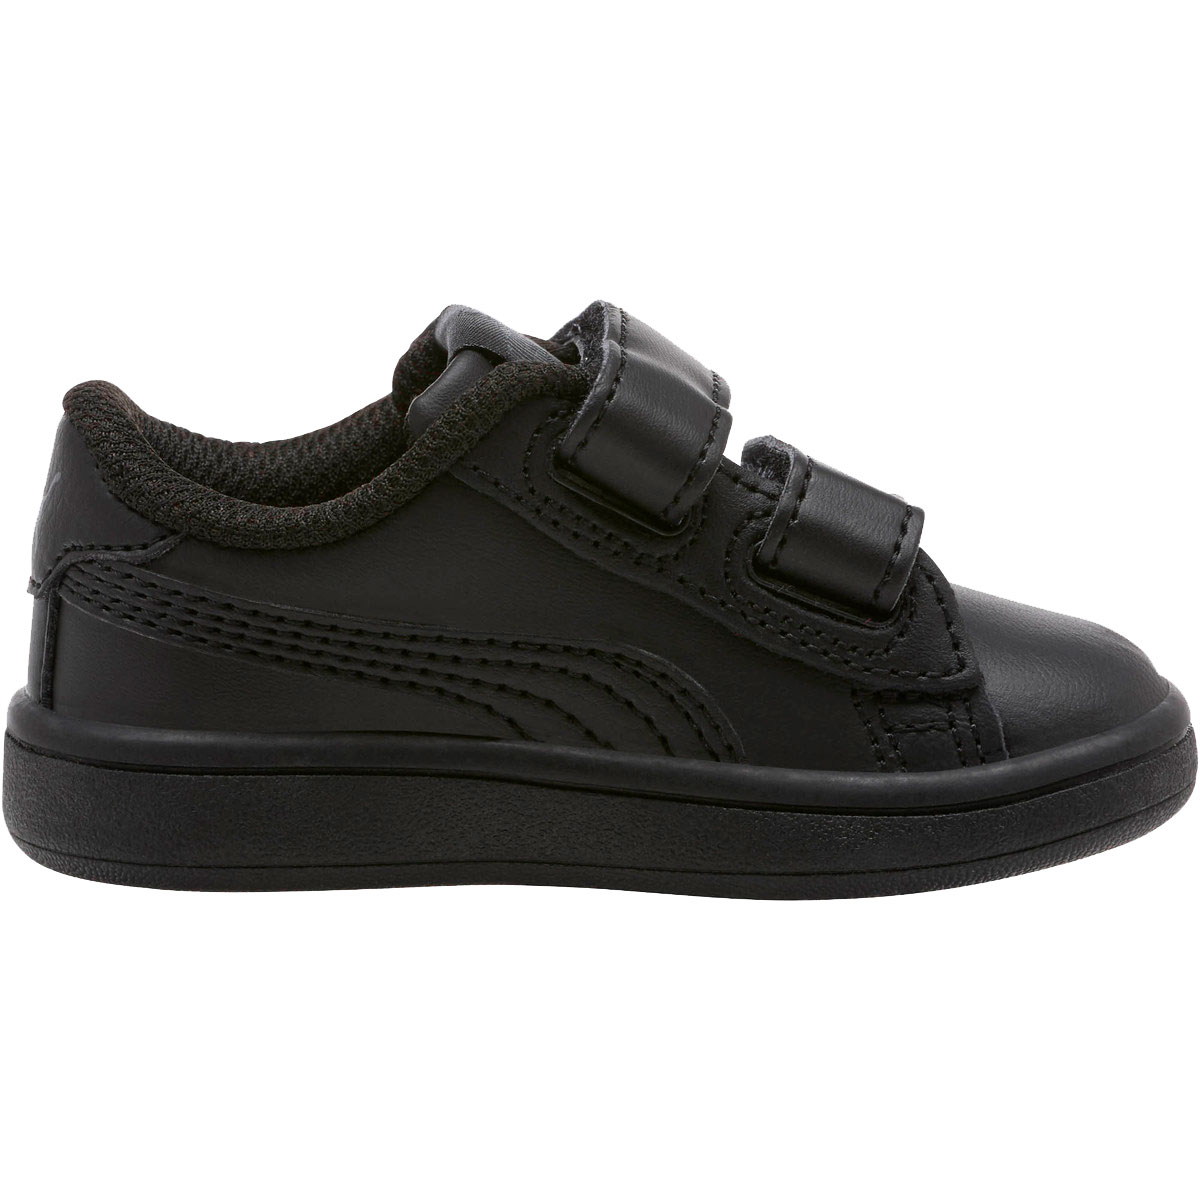 Puma Toddler Boys' Smash V2 Lv Sneakers - Black, 10